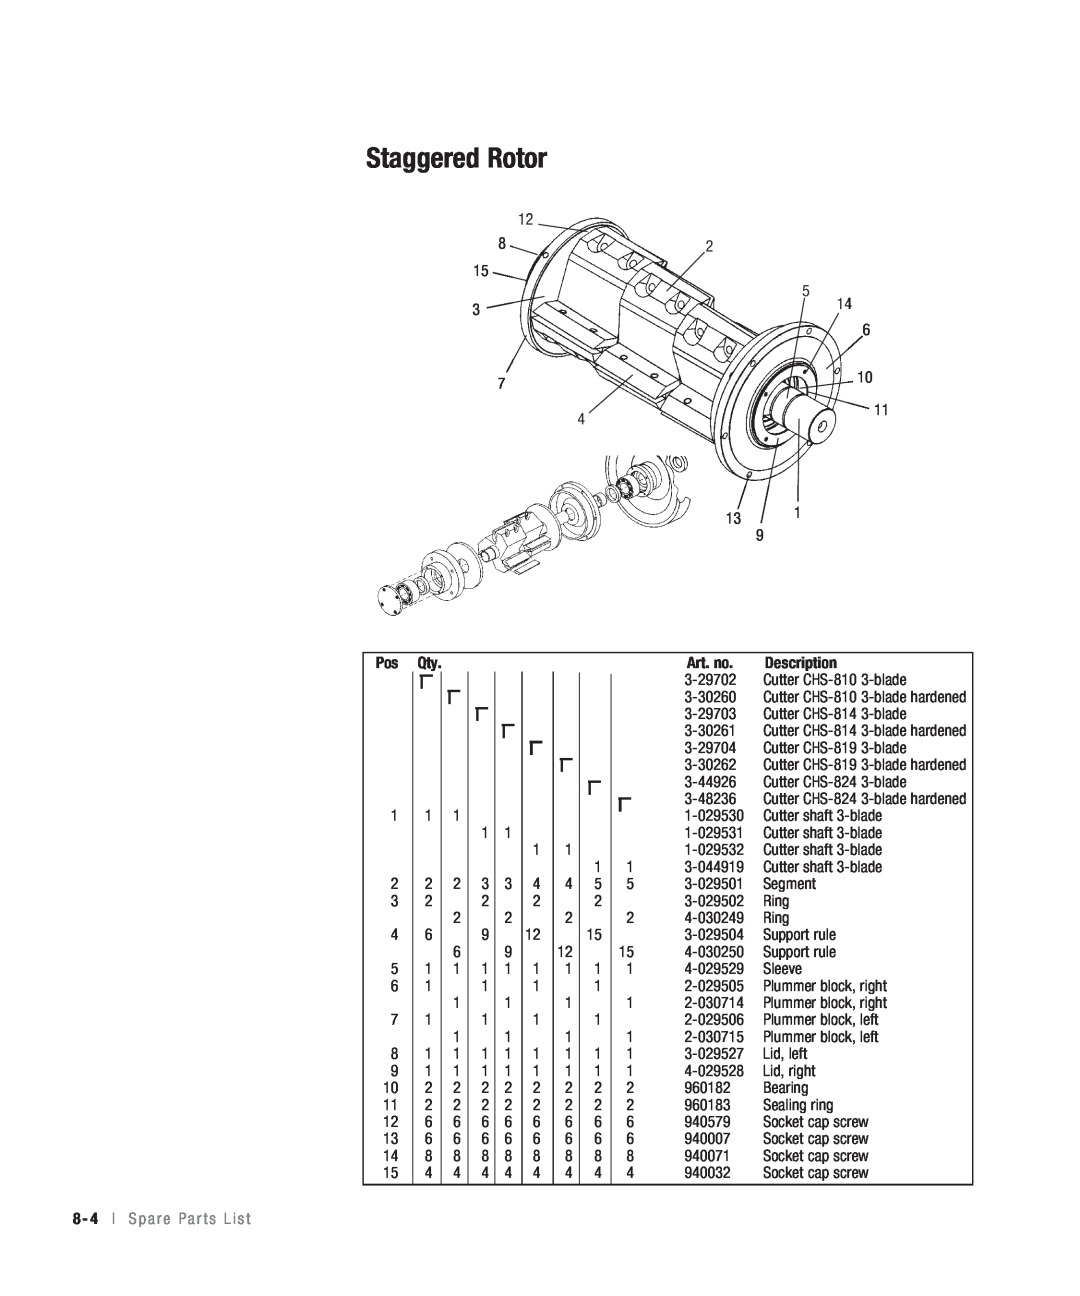 Conair CHS-810 manual Staggered Rotor, Art. no, Description, 8 - 4 l S p a r e P a r t s L i s t 